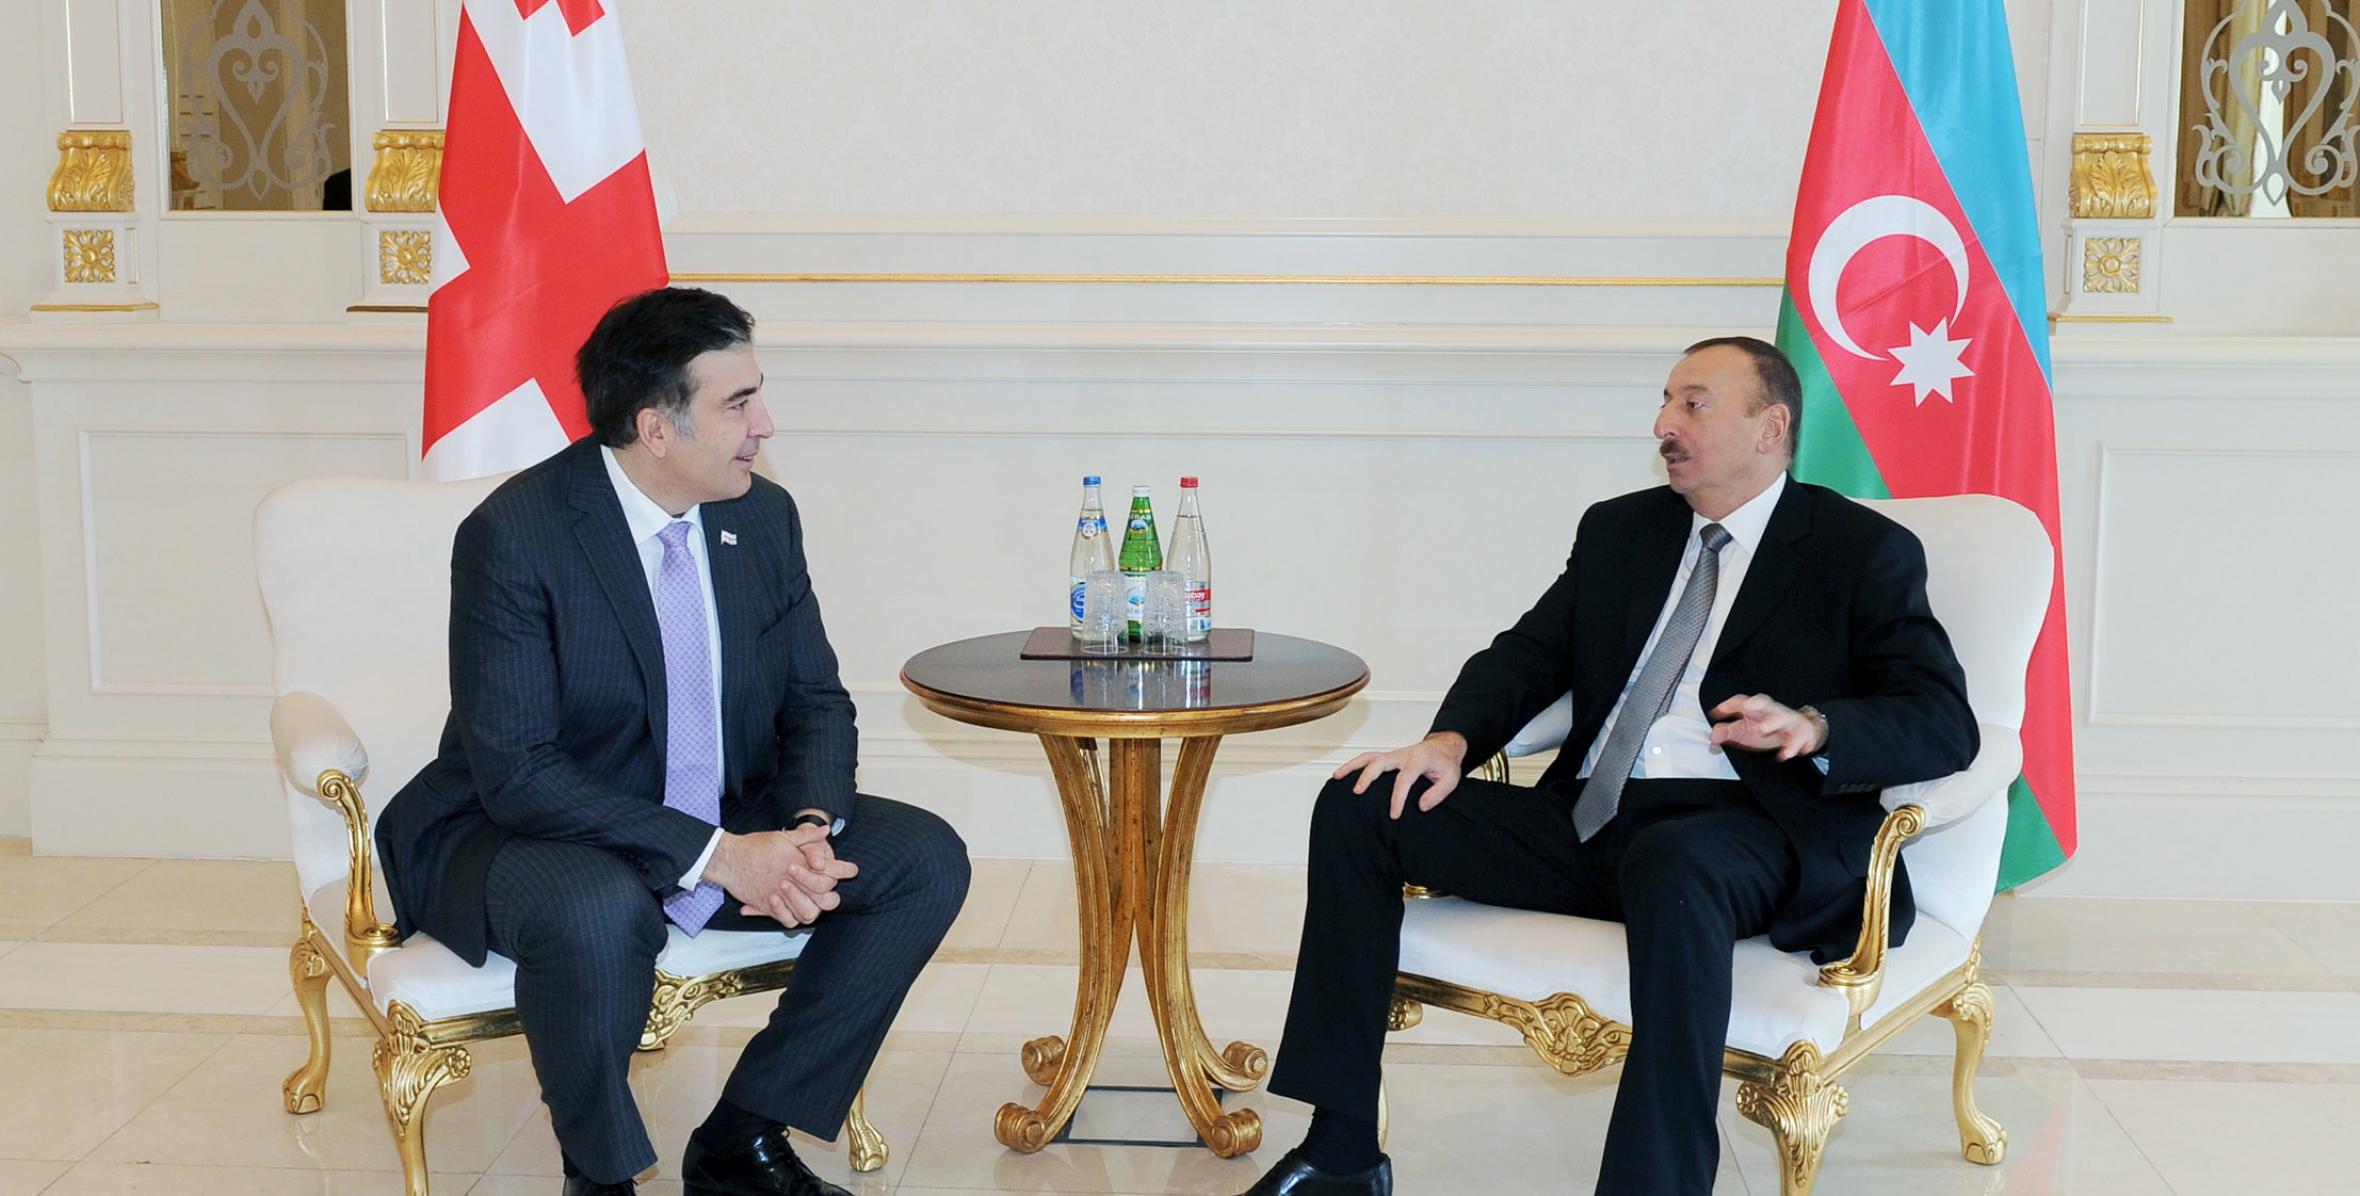 Ilham Aliyev and President of Georgia Mikheil Saakashvili held a one-on-one meeting